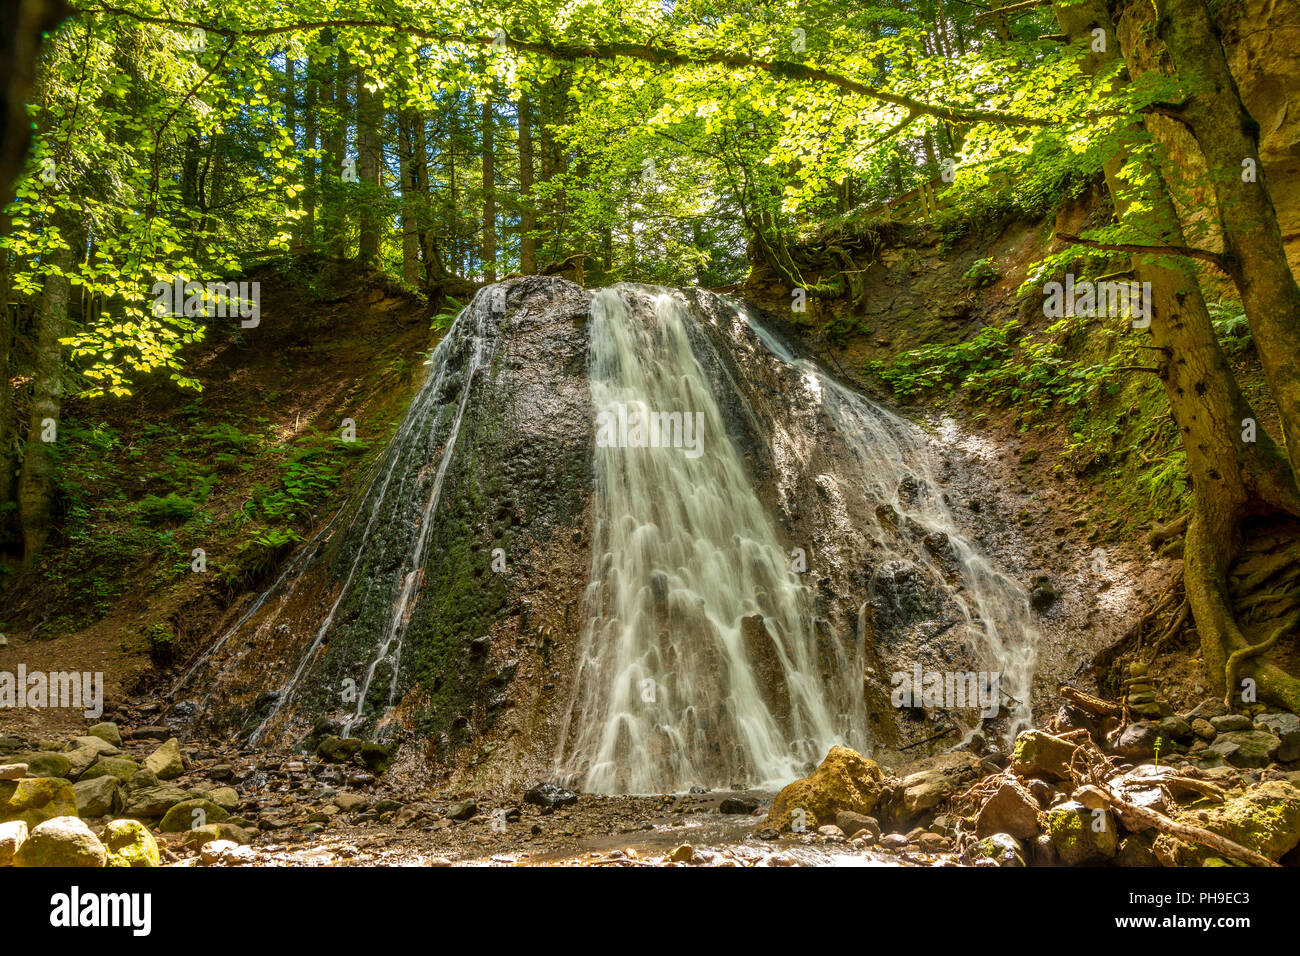 Rossignolet cascata in prossimità di Le Mont Dore, Auvergne Parco Nazionale Vulcani, Puy de dome, Auvergne Rhone Alpes, Francia Foto Stock